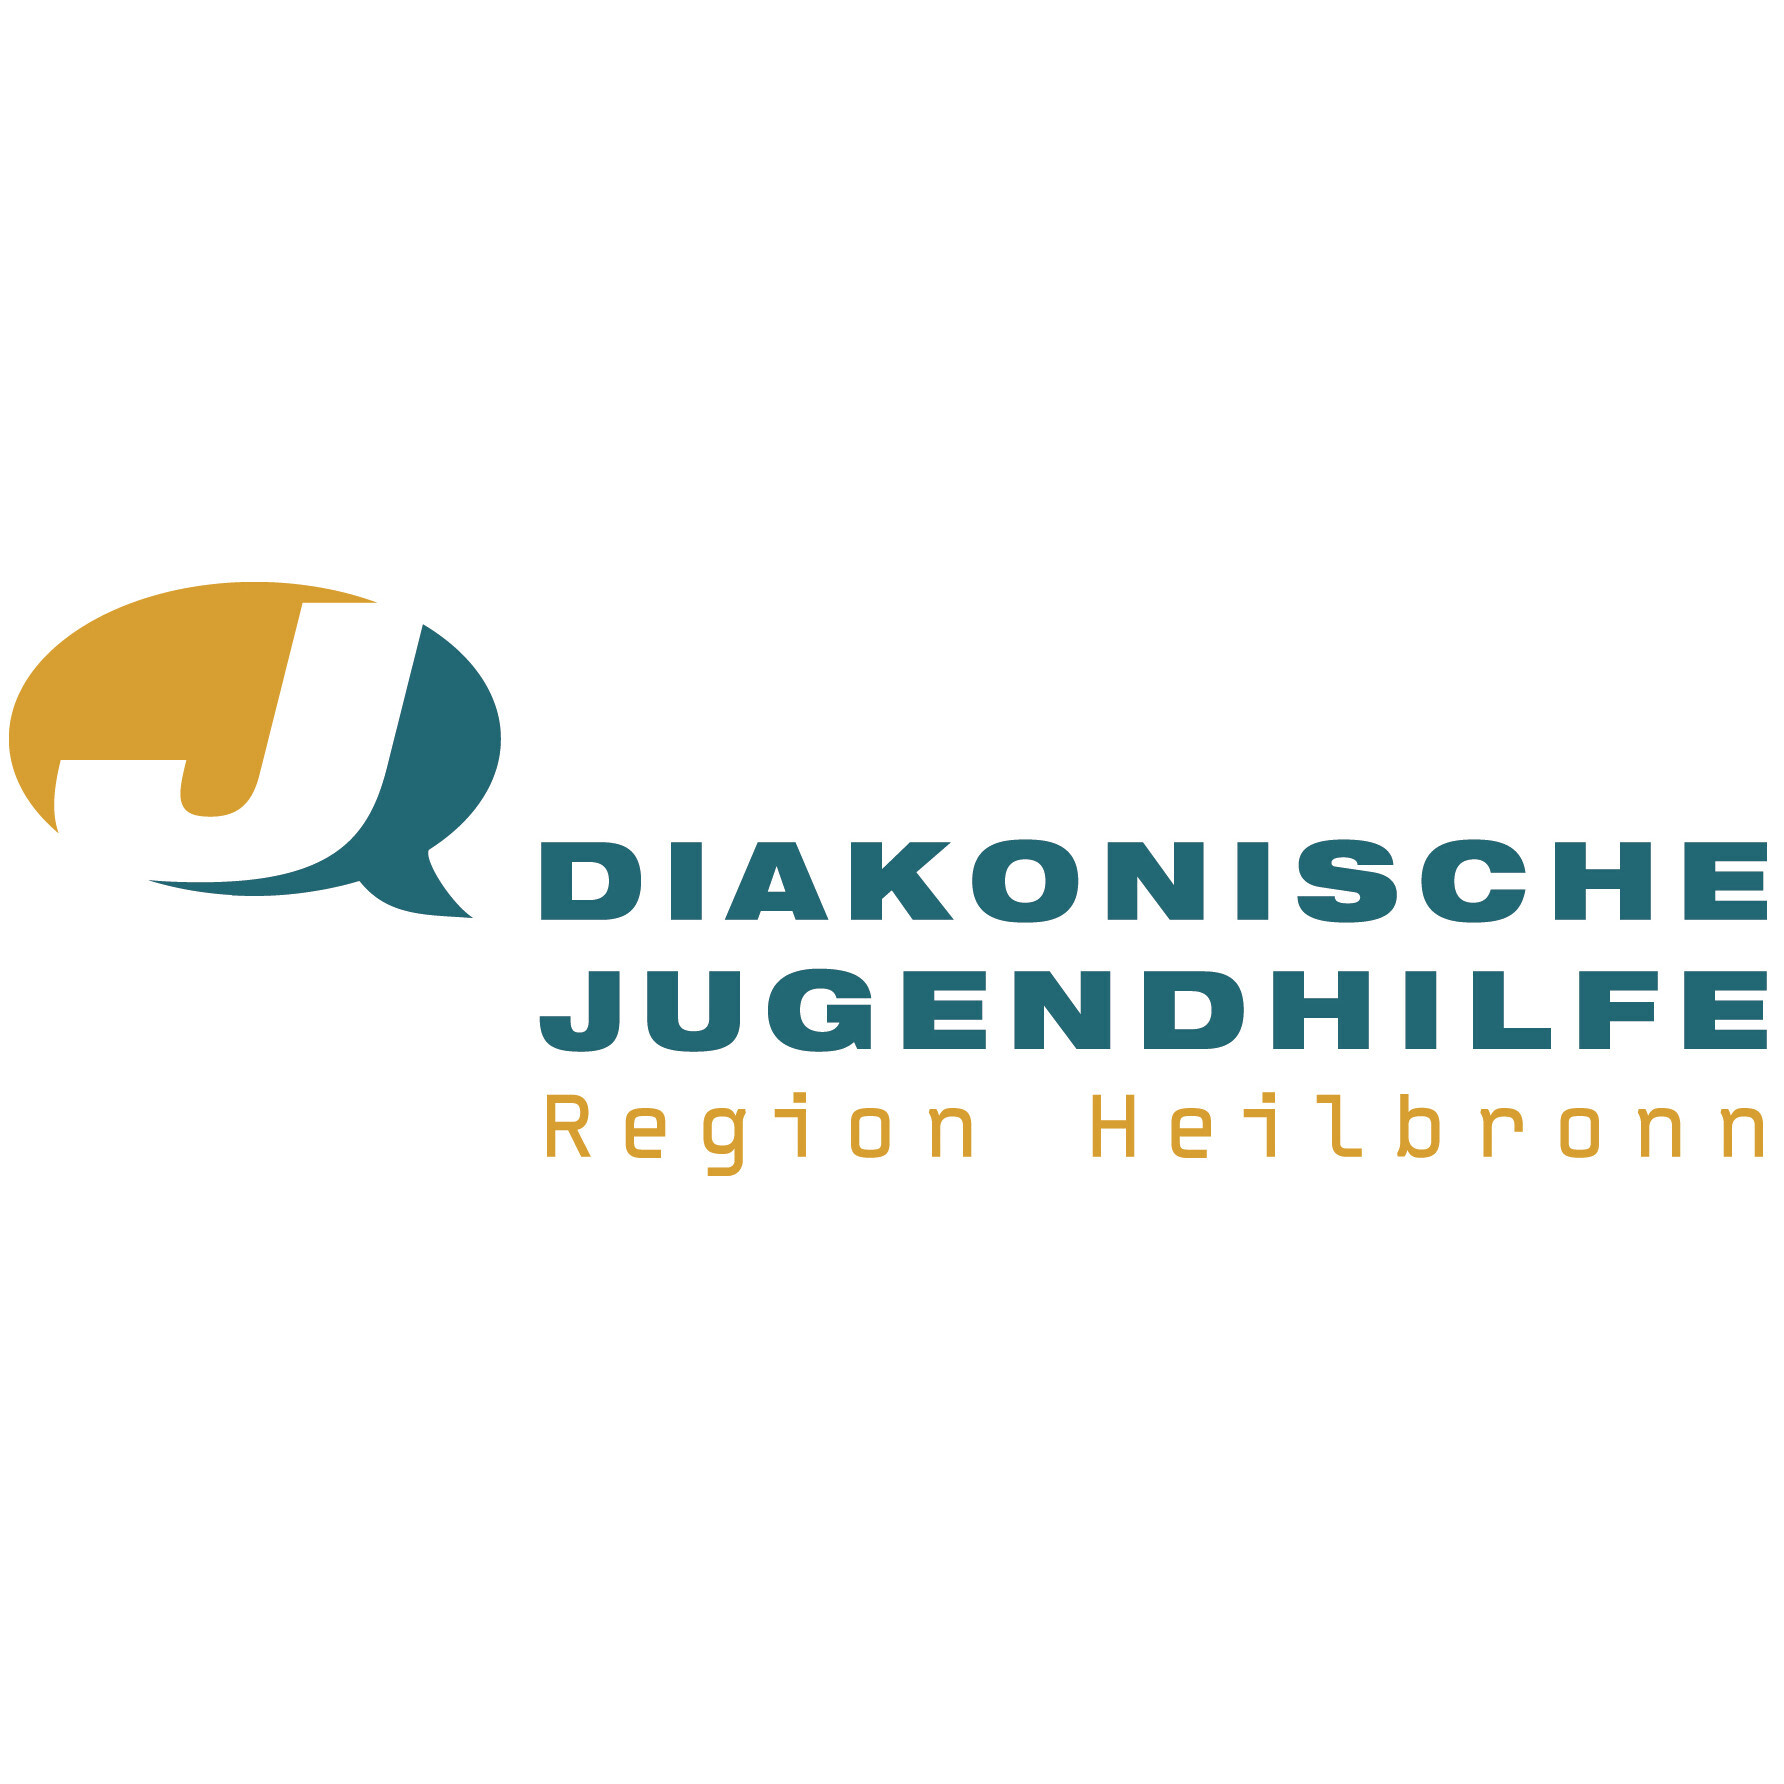 Diakonische Jugendhilfe Region Heilbronn gGmbH